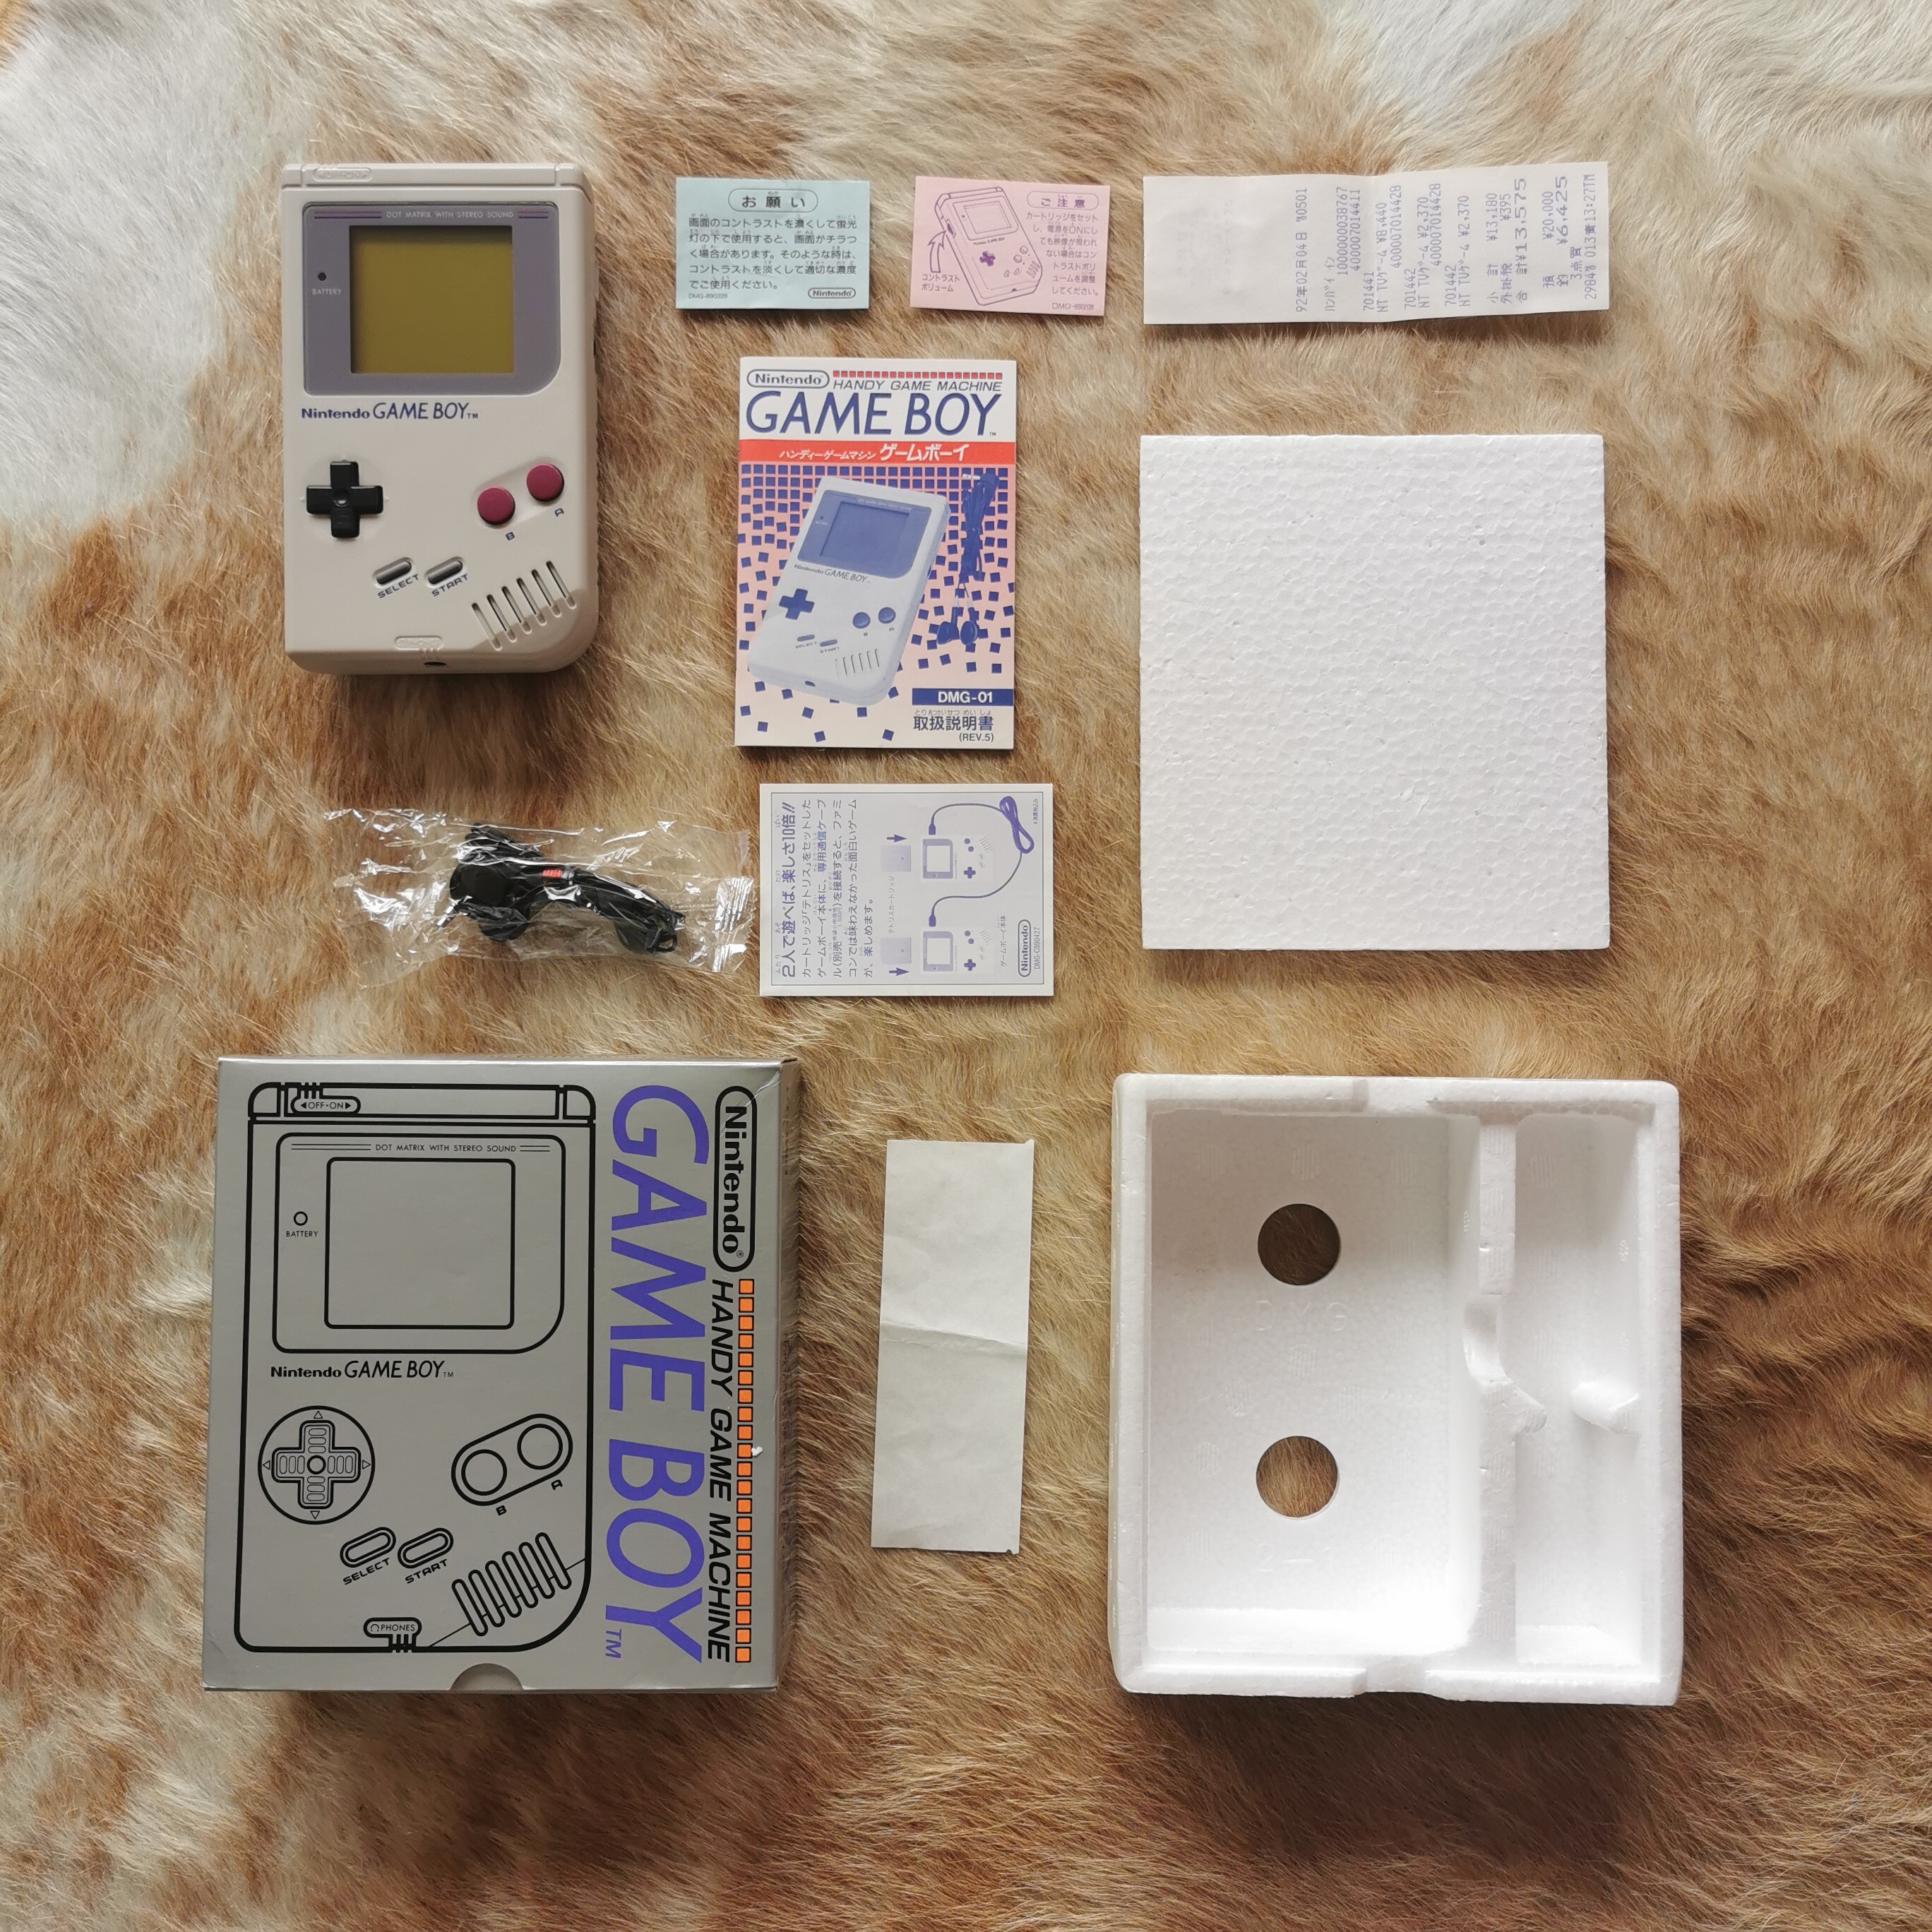  Nintendo Game Boy Off-White Console [JP]